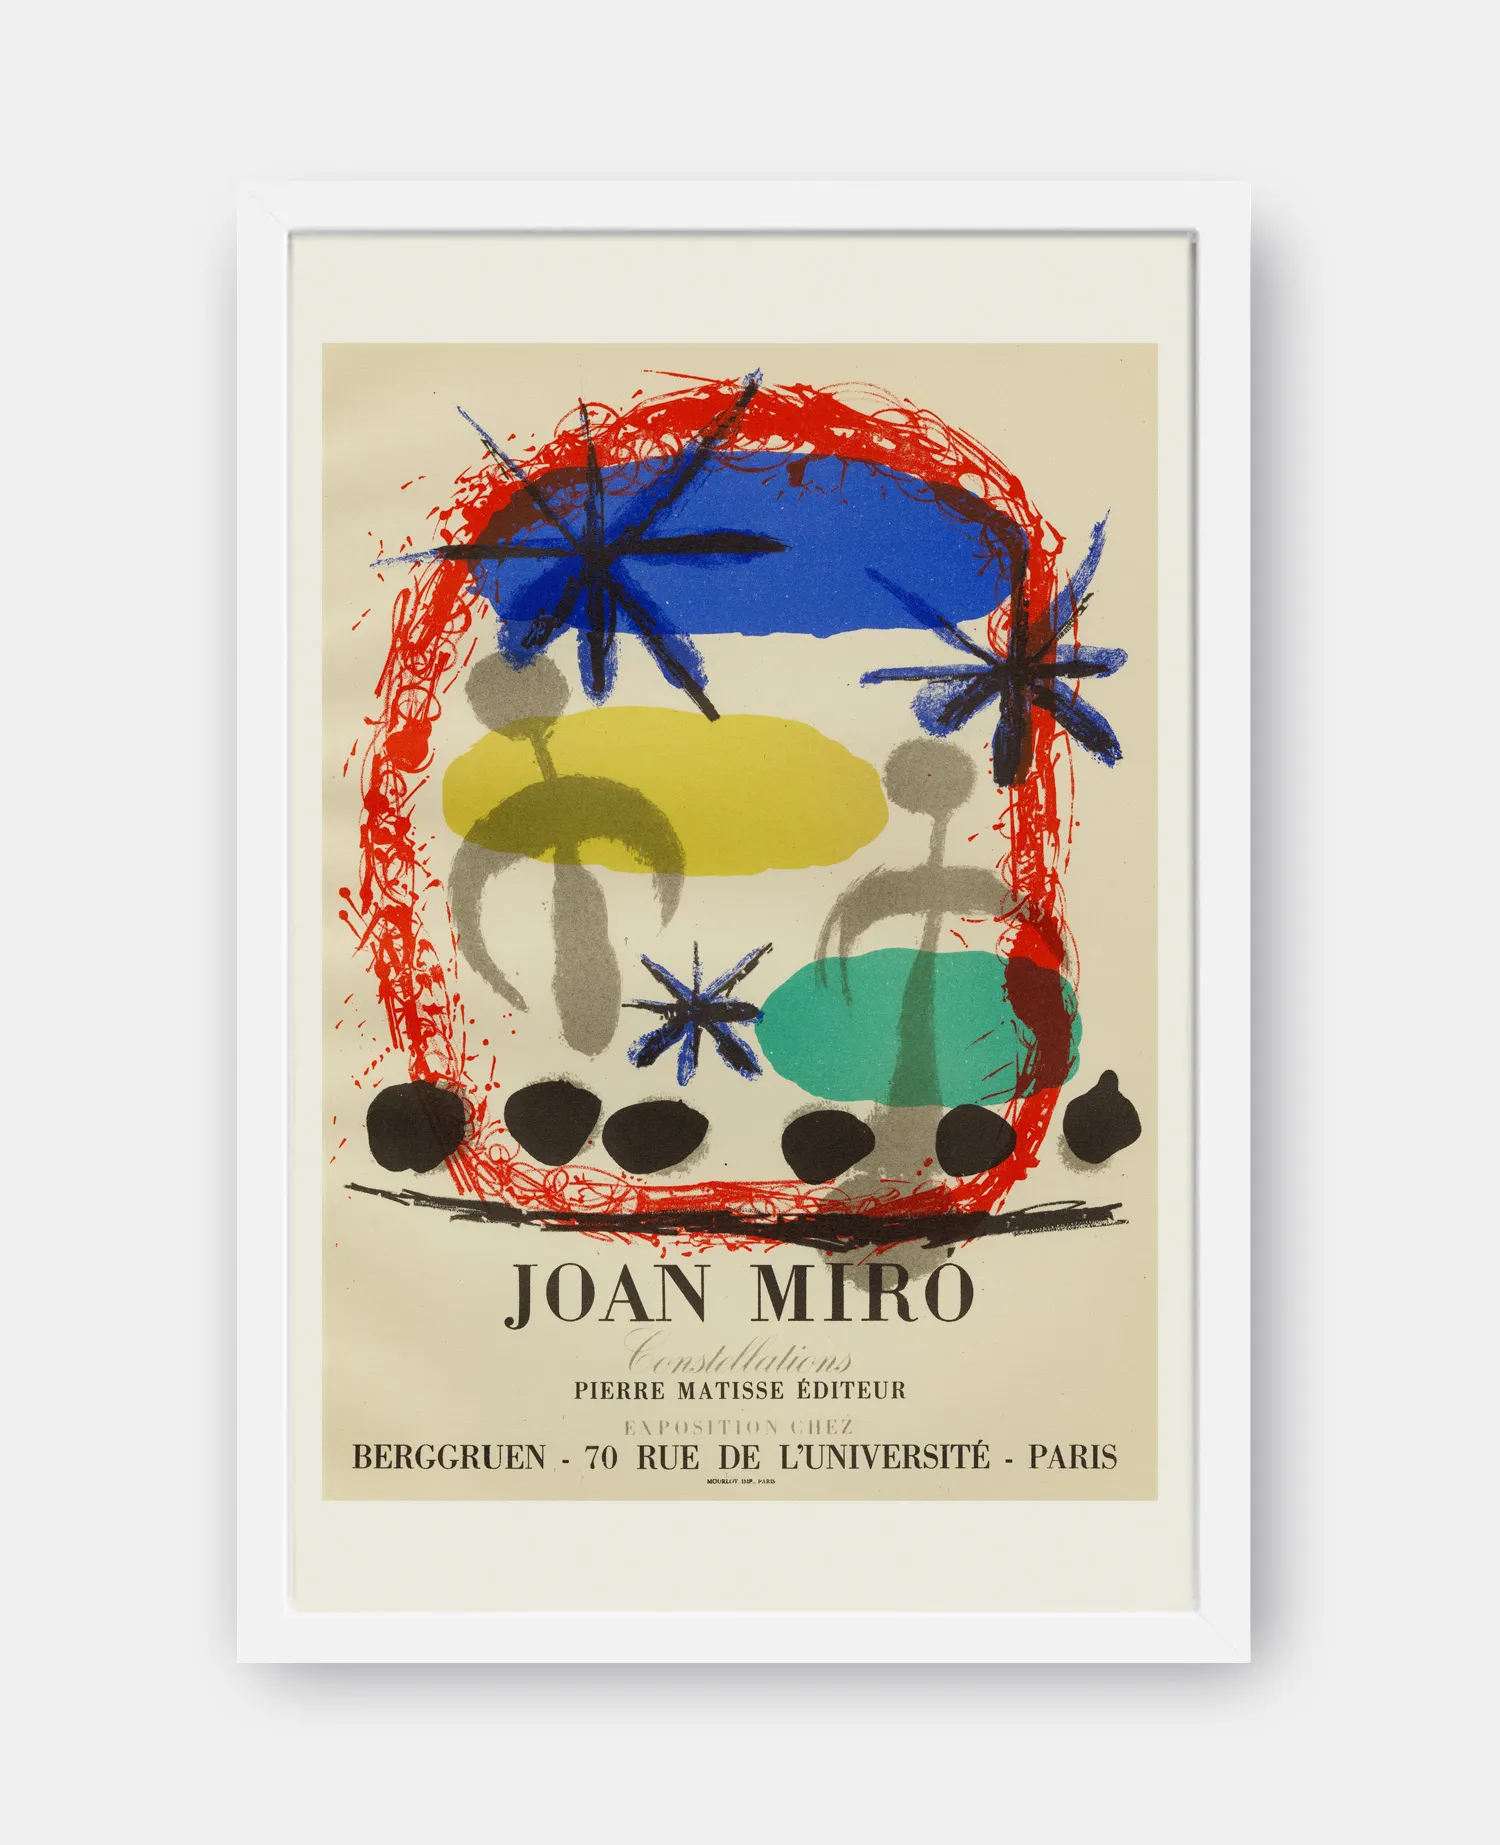 Joan-Miro-–-Constellations-–-1950-Exhibition-Poster-Print gray